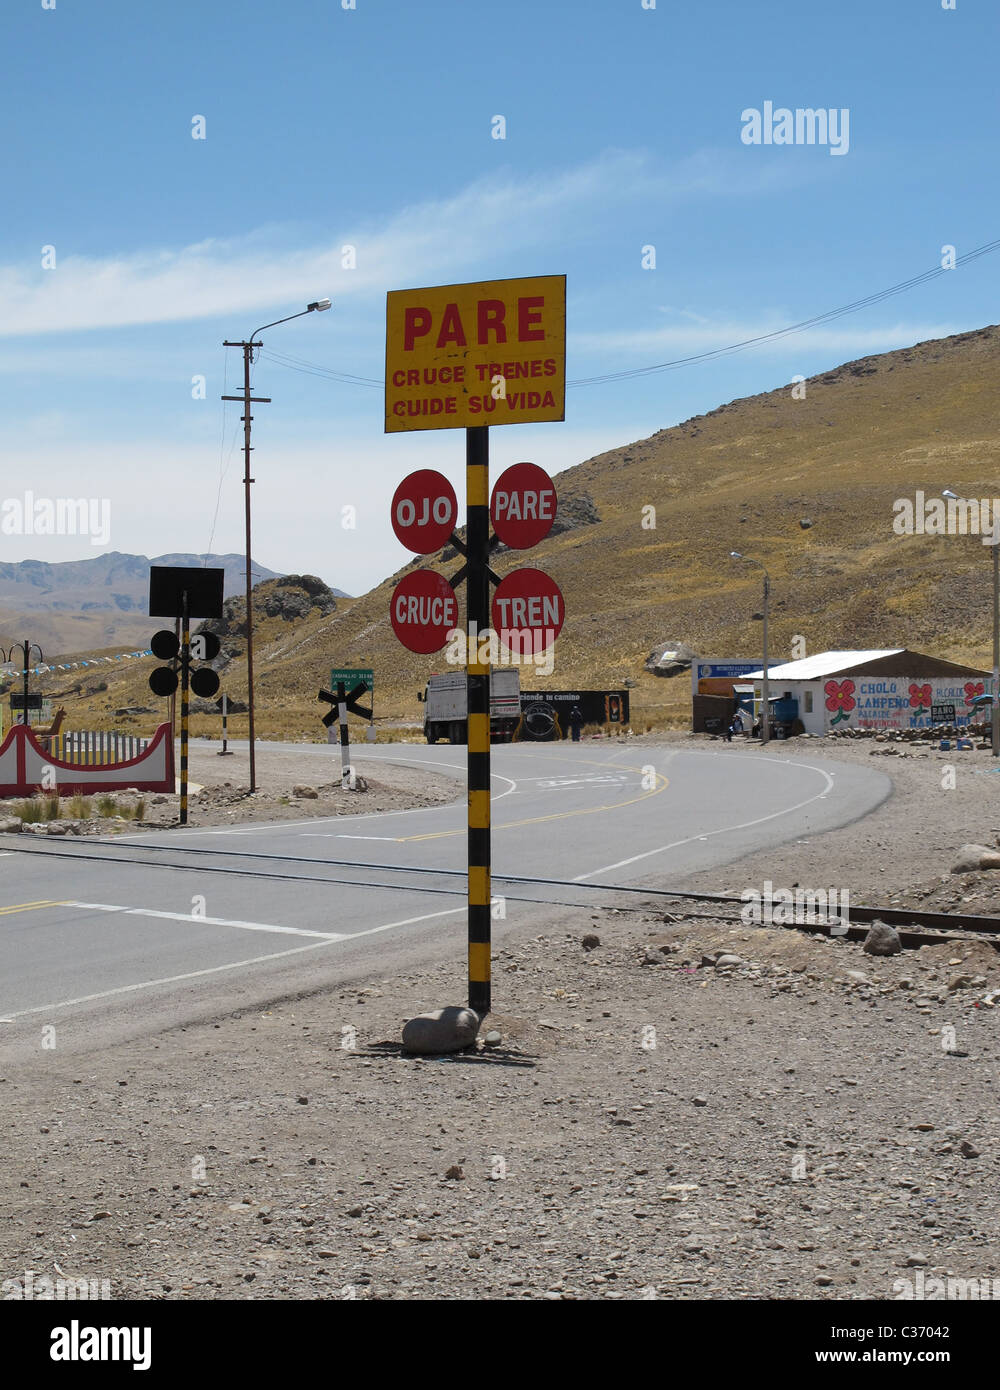 Peruan railway line crossing street Stock Photo